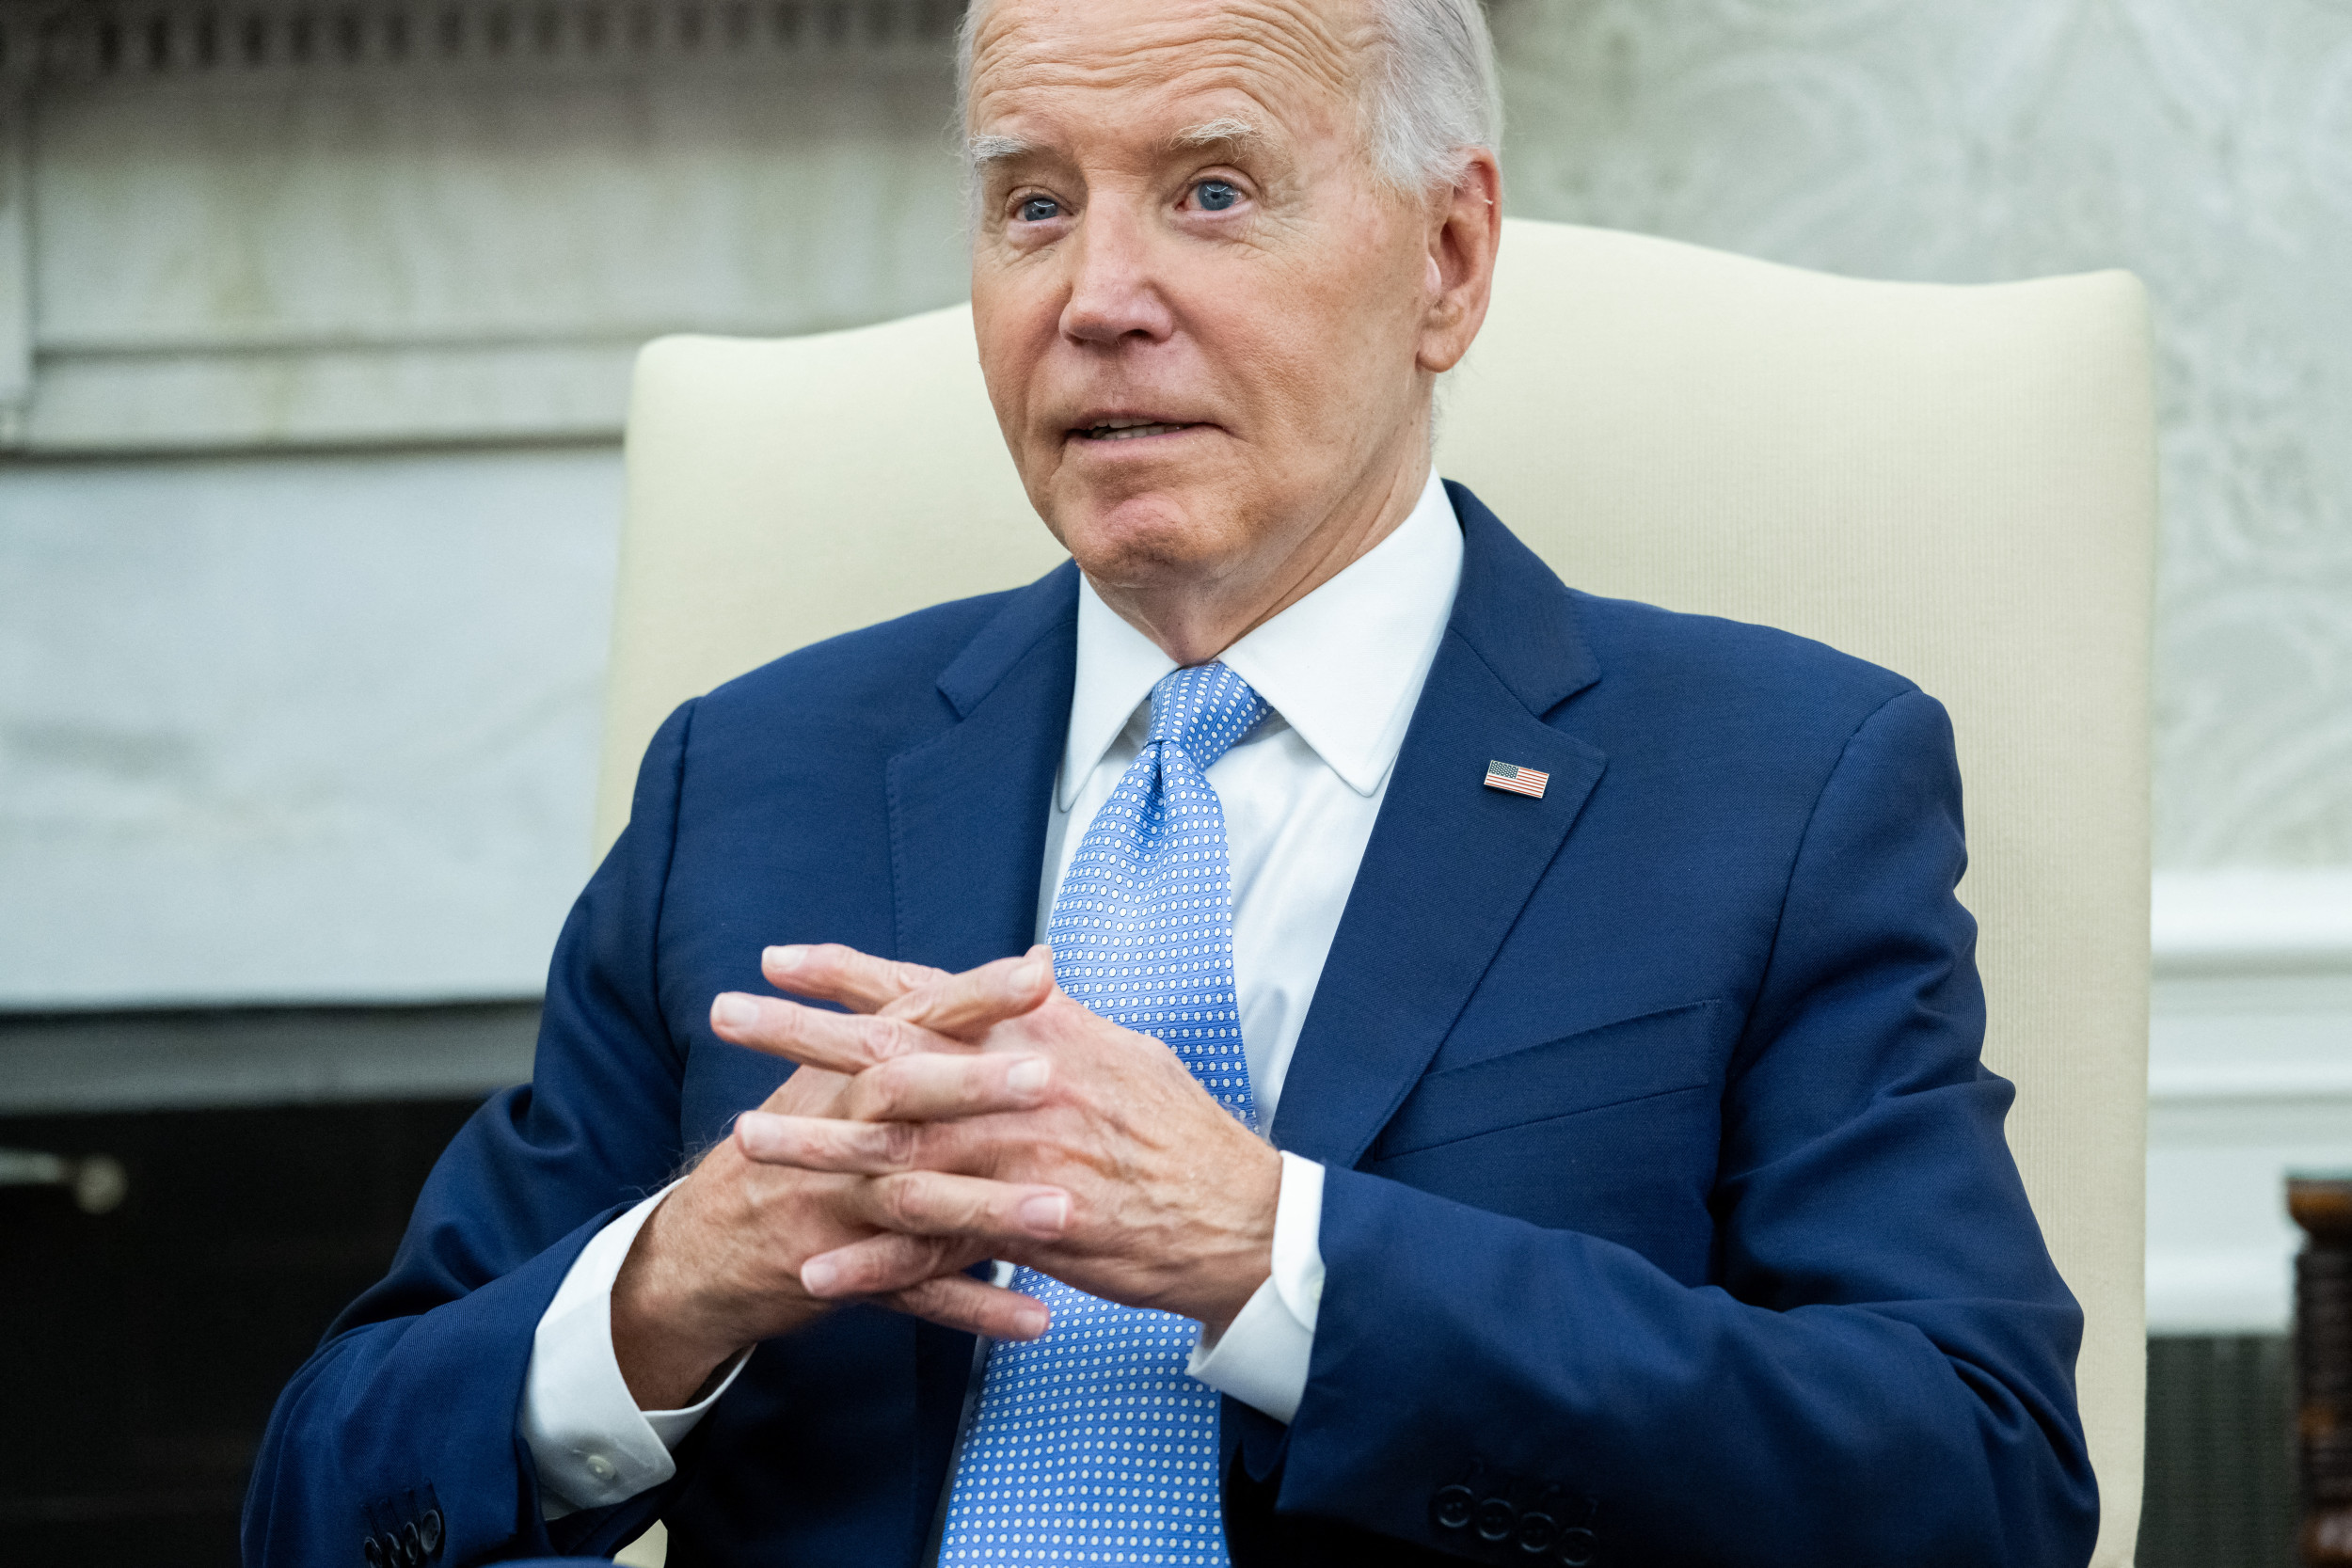 Democrats Increasingly Keep Distance From Joe Biden